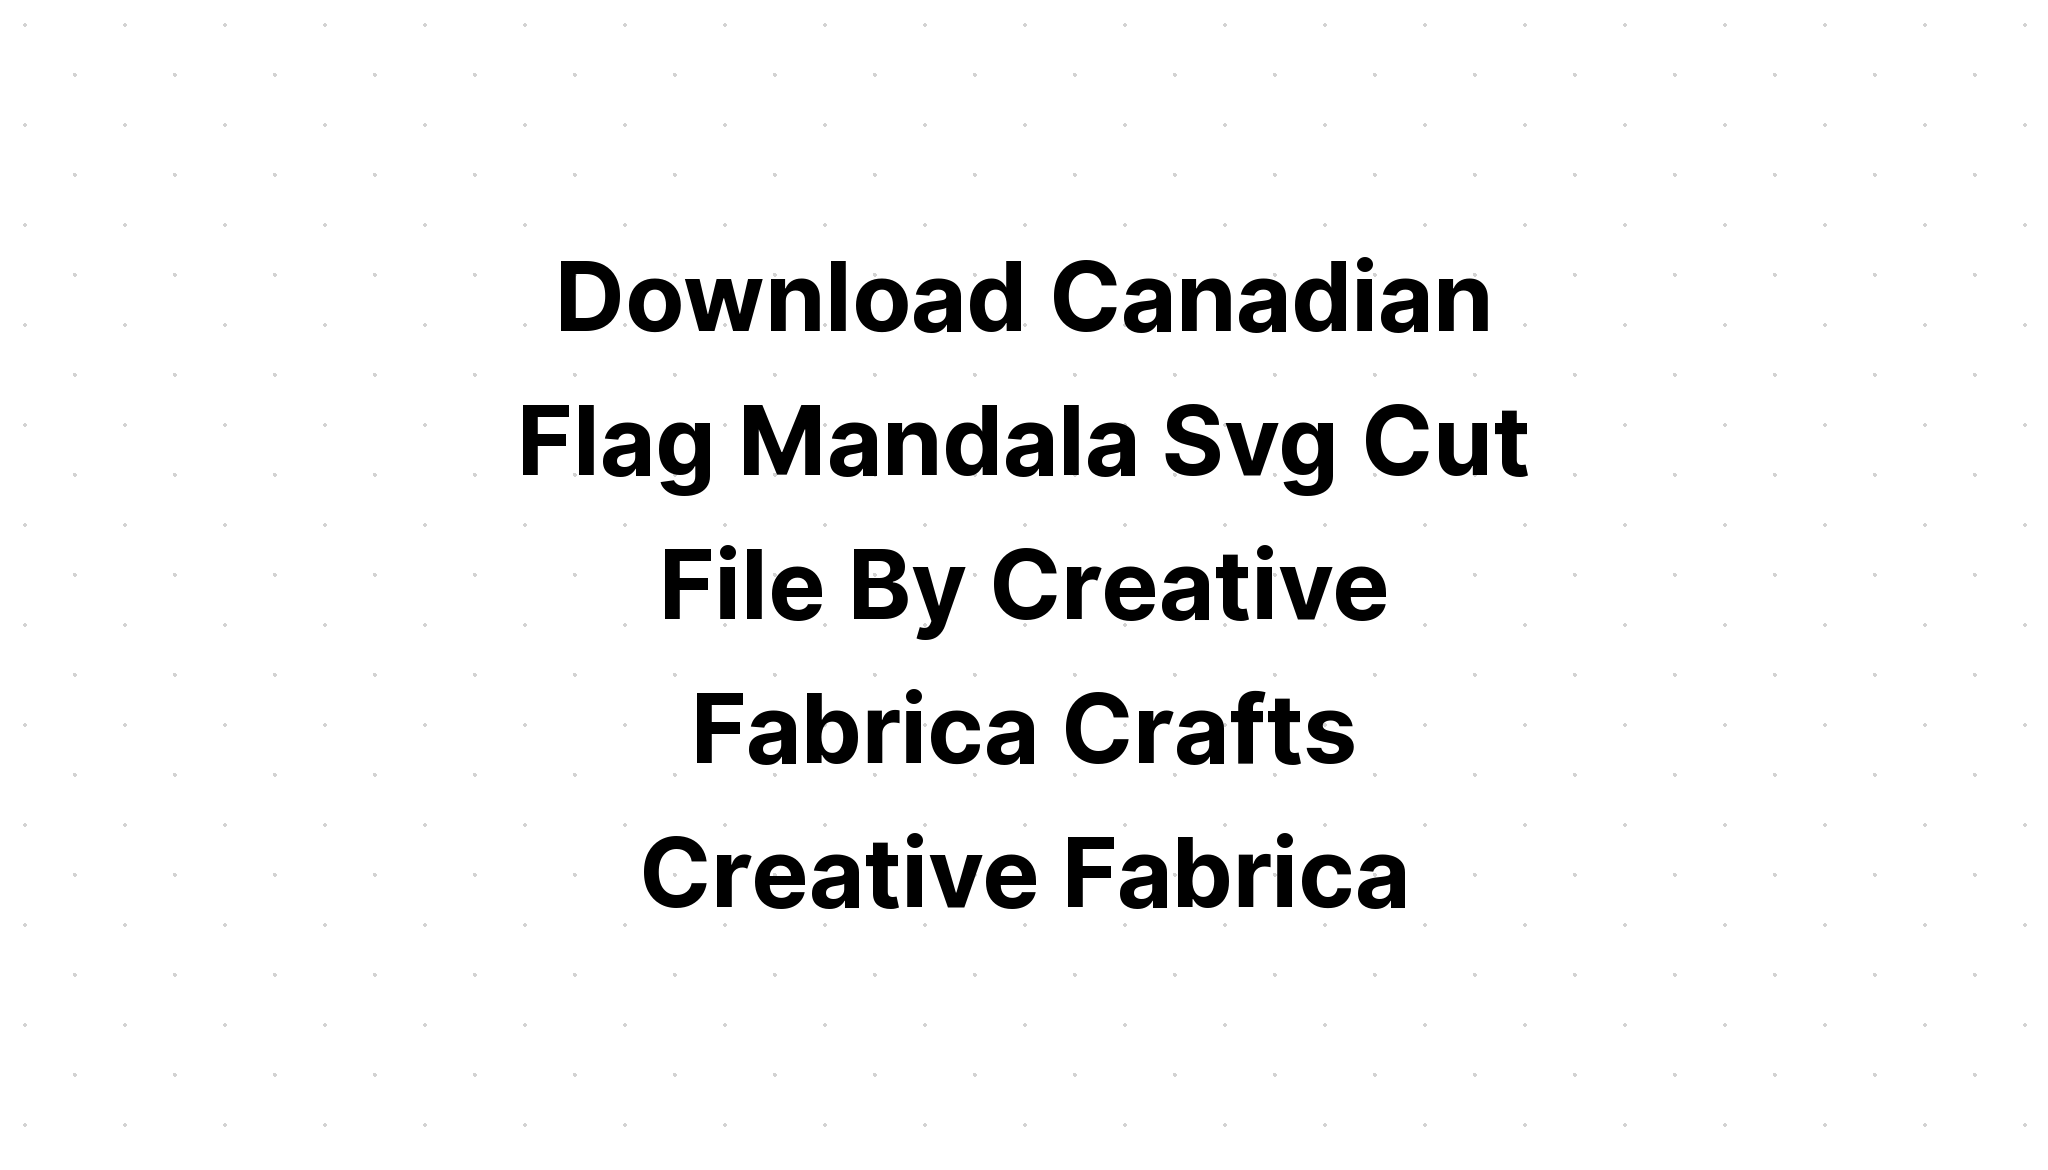 Download Free Mandala Kitty Face Svg - Download Free SVG Cut File